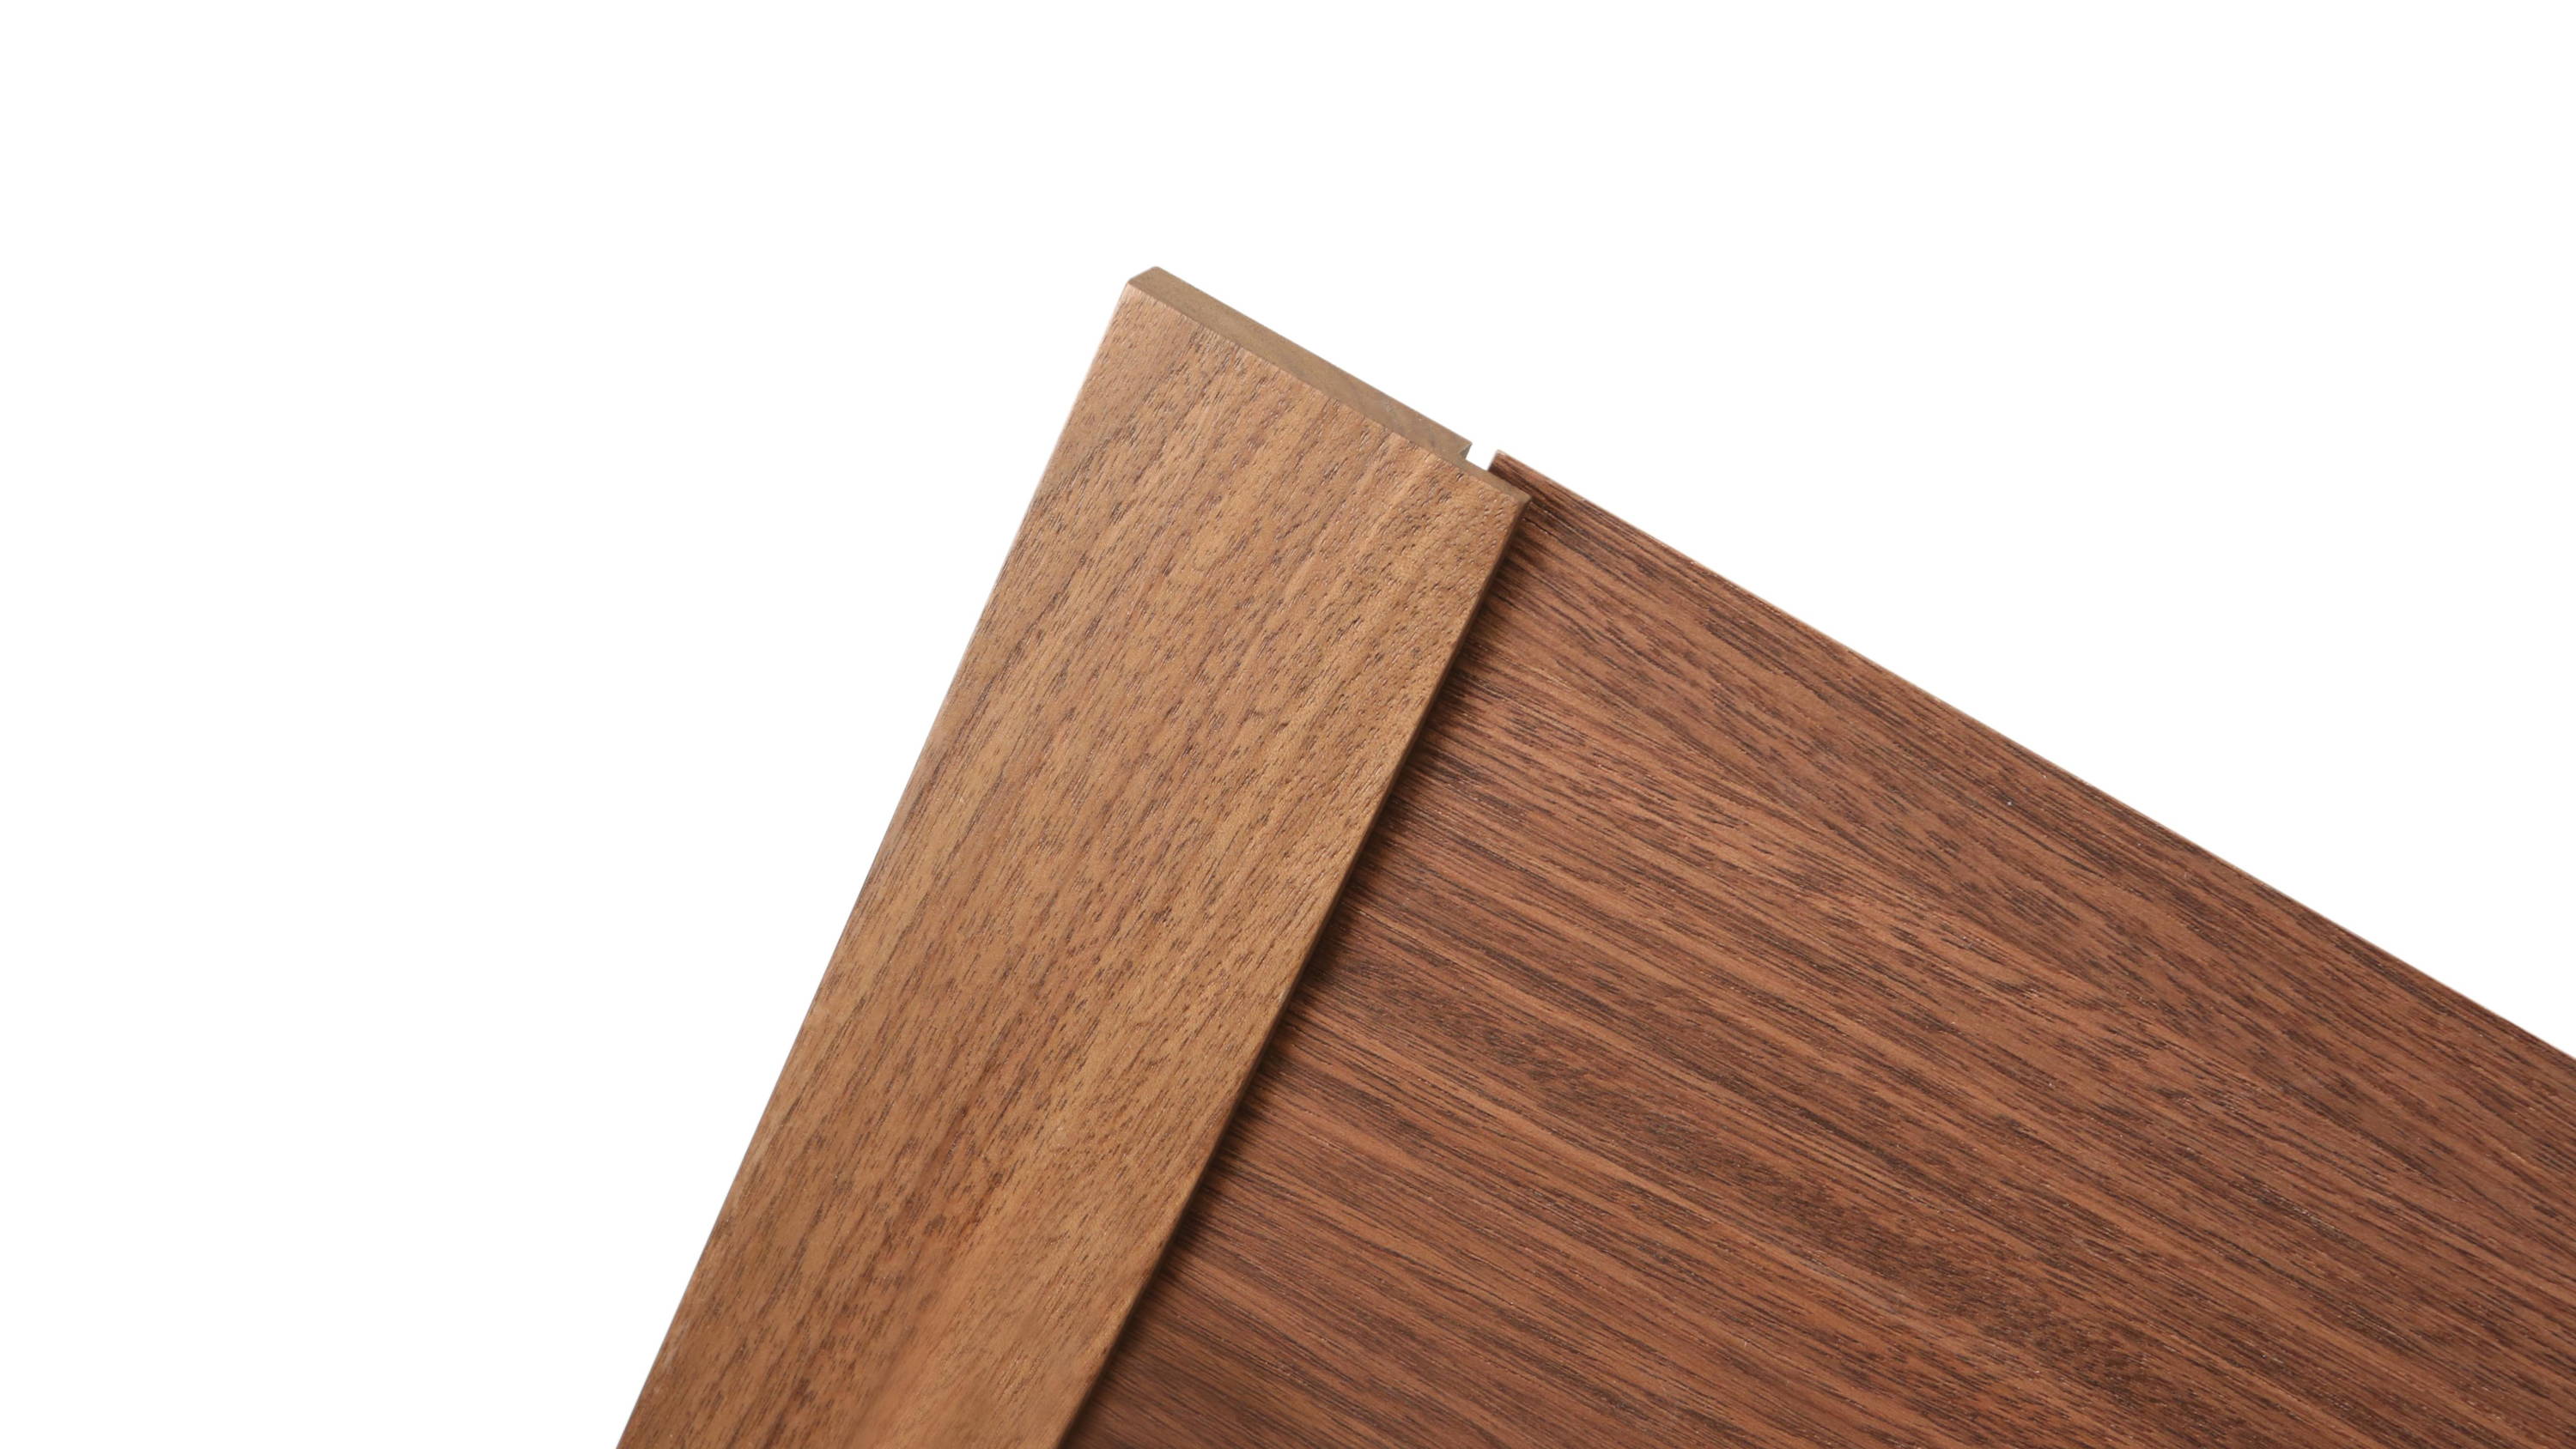 J-Roller - Buy Best Installation Tool For Wood Planks